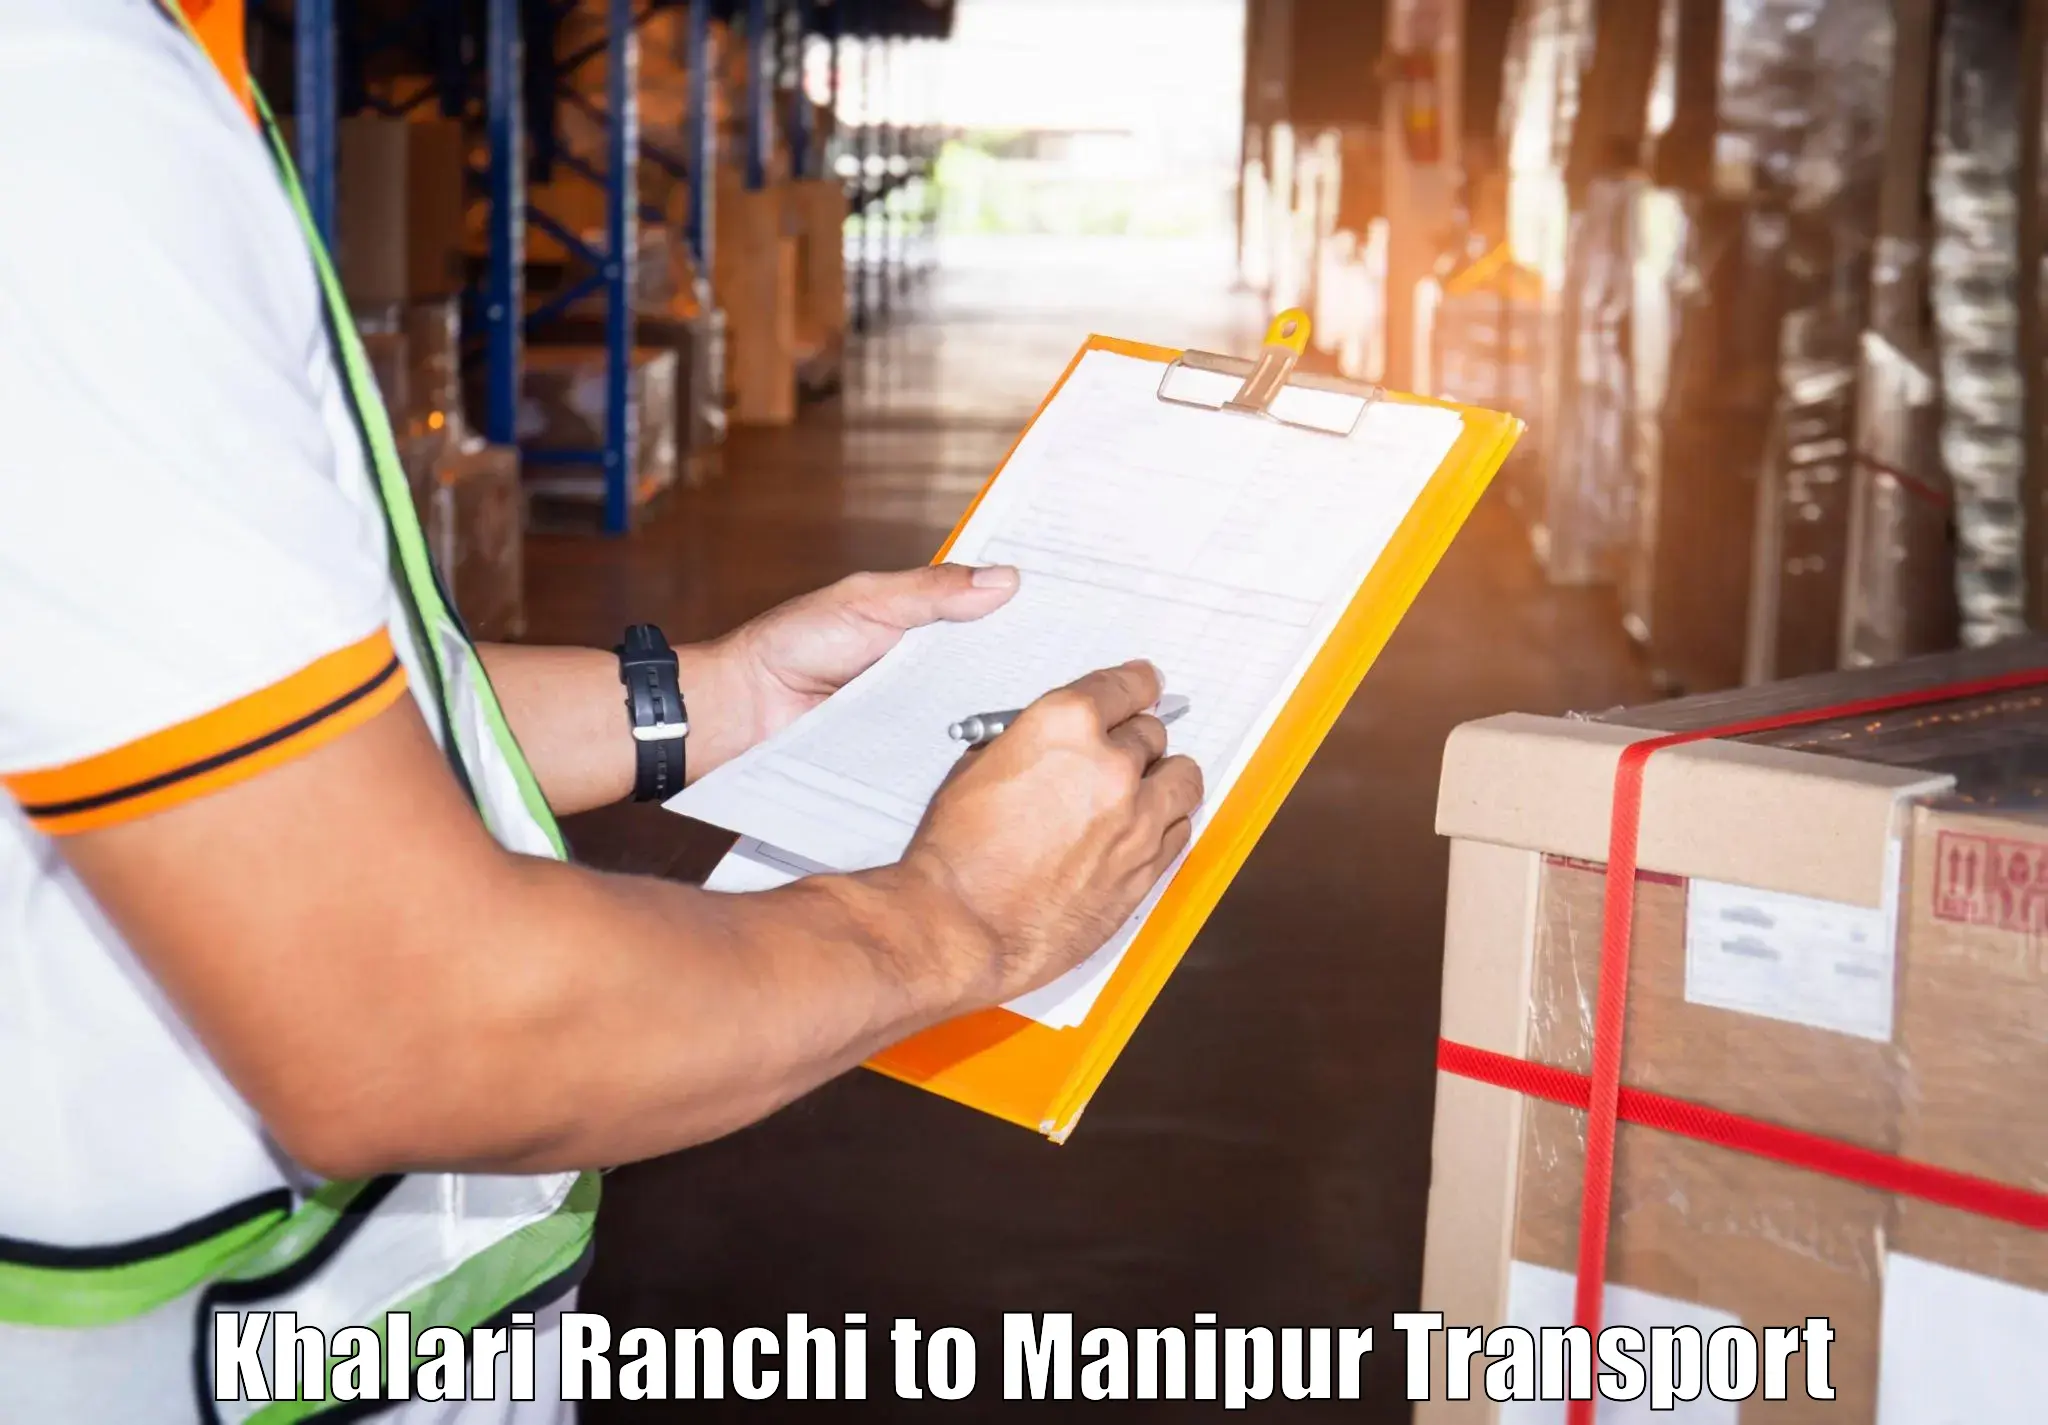 Transport in sharing Khalari Ranchi to Imphal